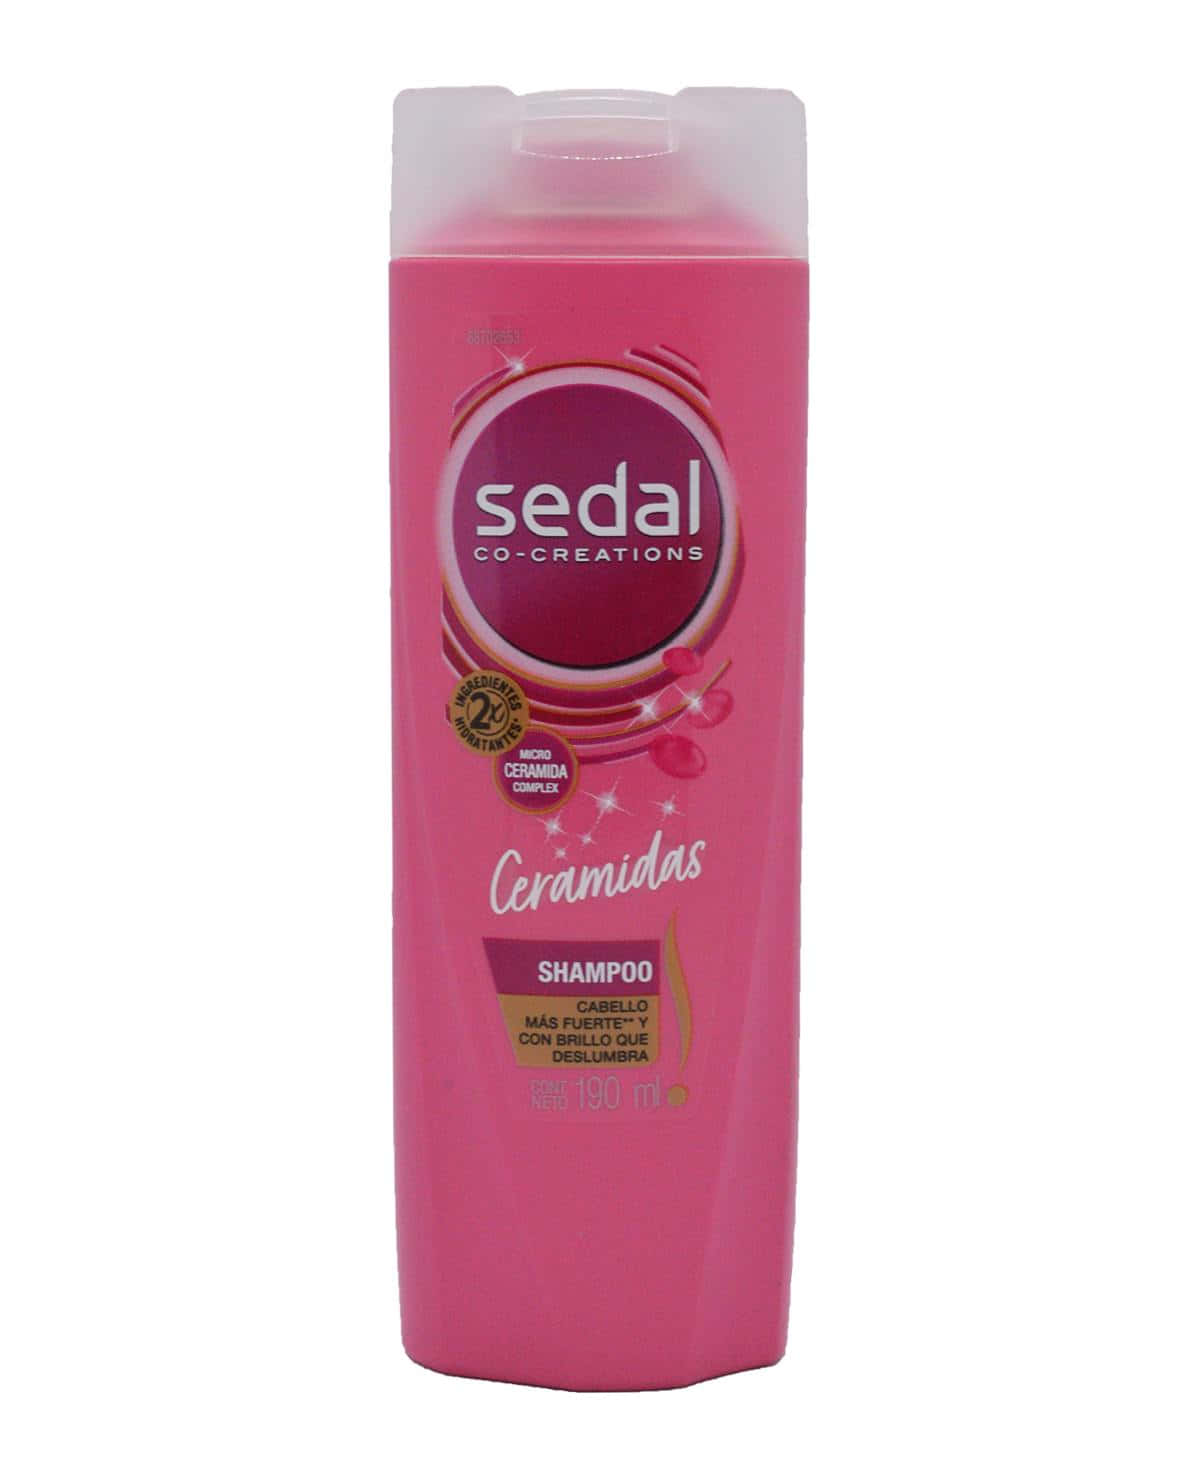 Shampoo Sedal Ceramidas 190 Ml